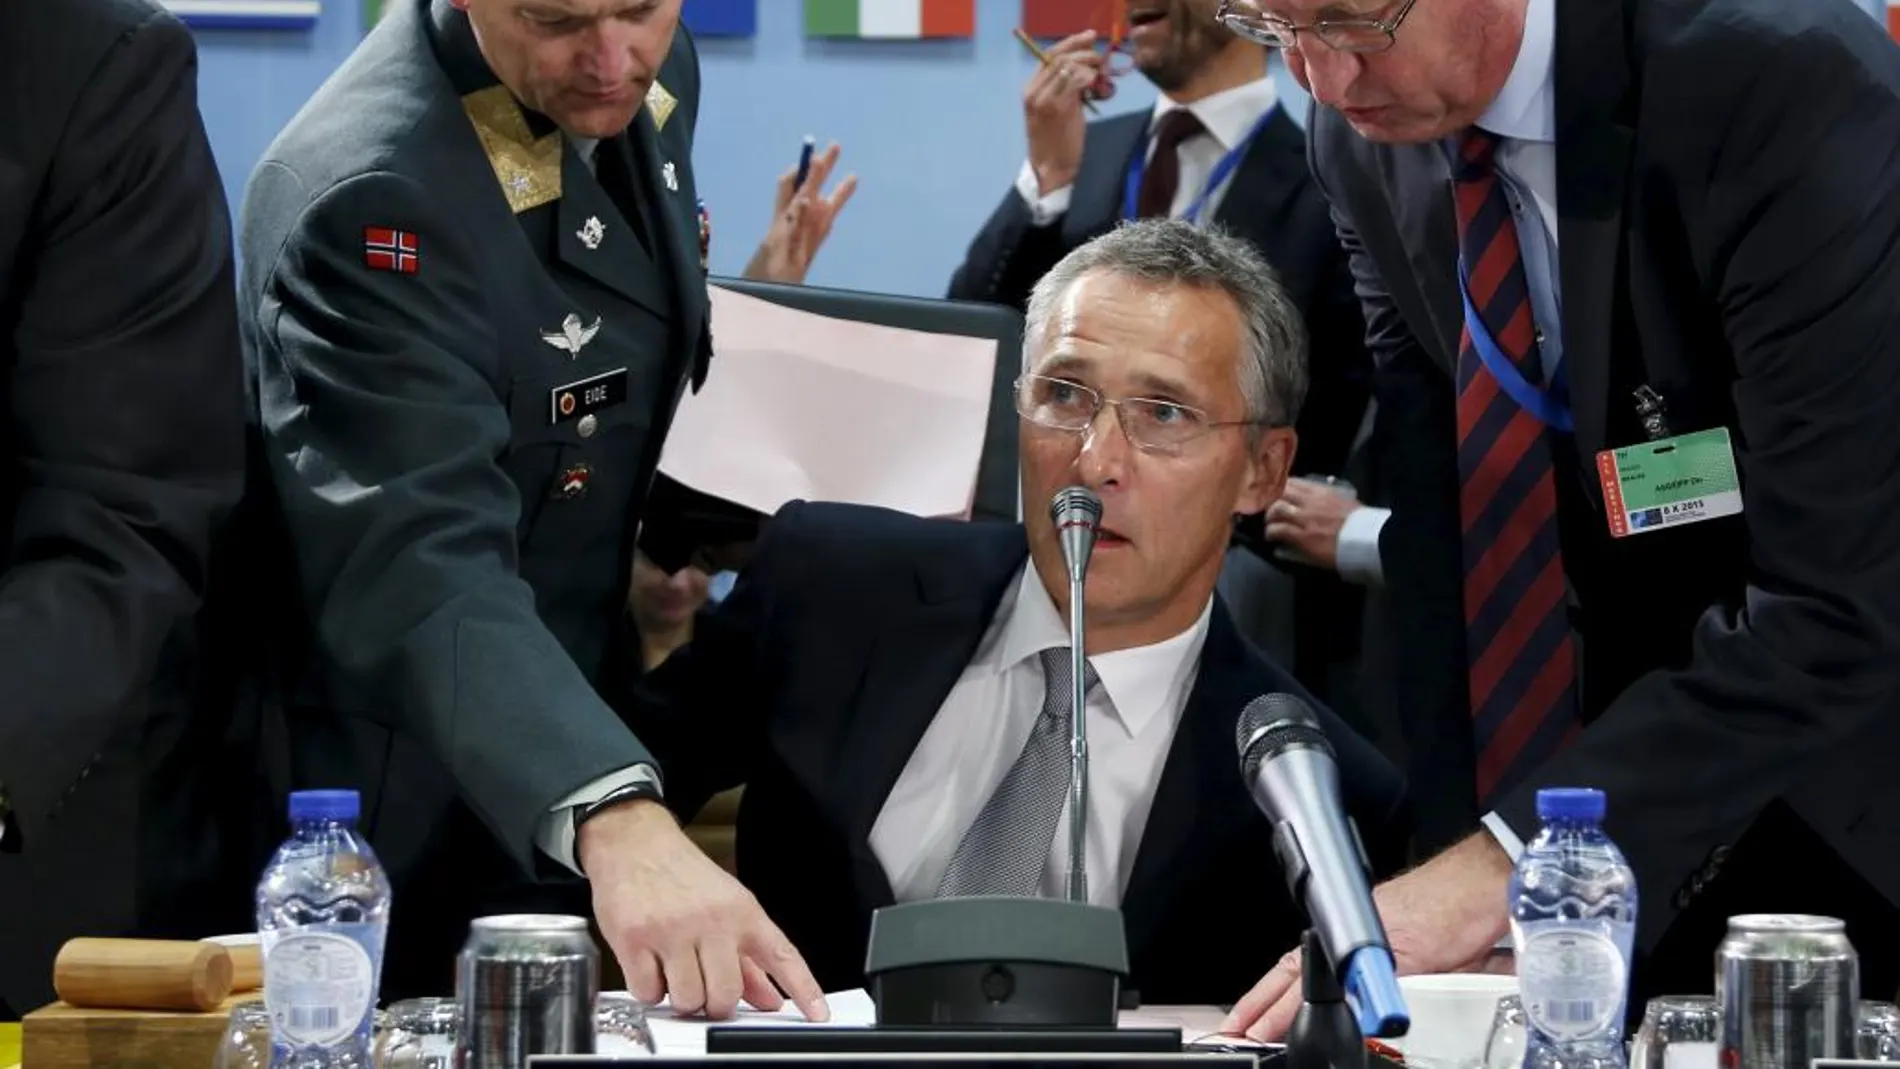 El secretario general de la OTAN, Jens Stoltenberg.